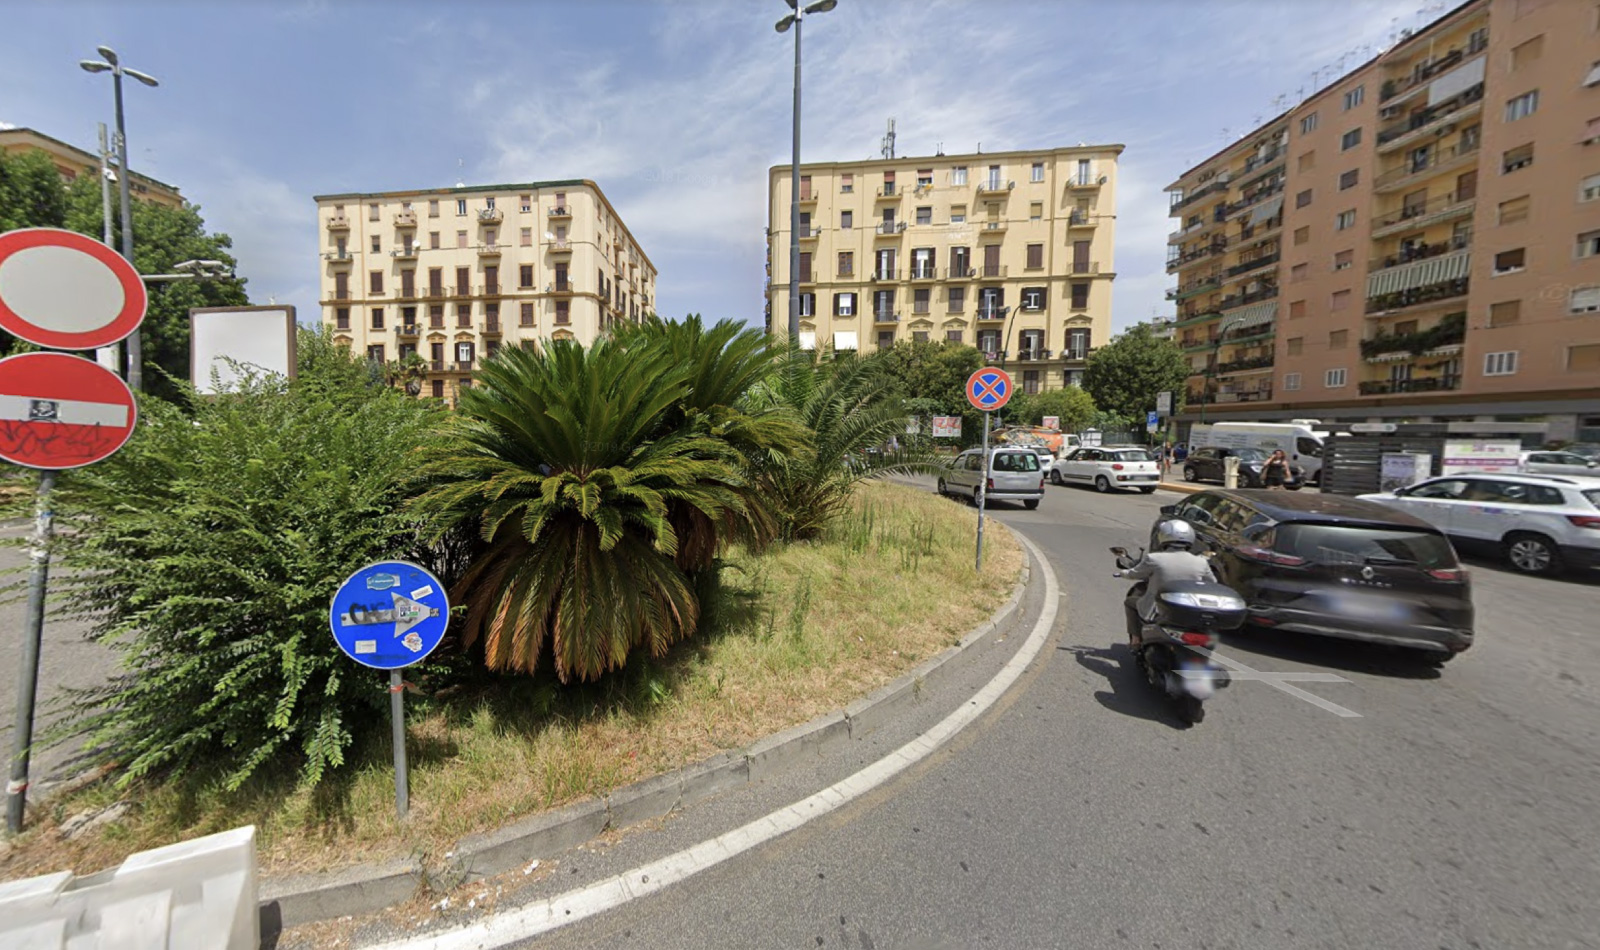 Фотография площади Пьяцца дельи Артисти в Неаполе взята с карт Google.